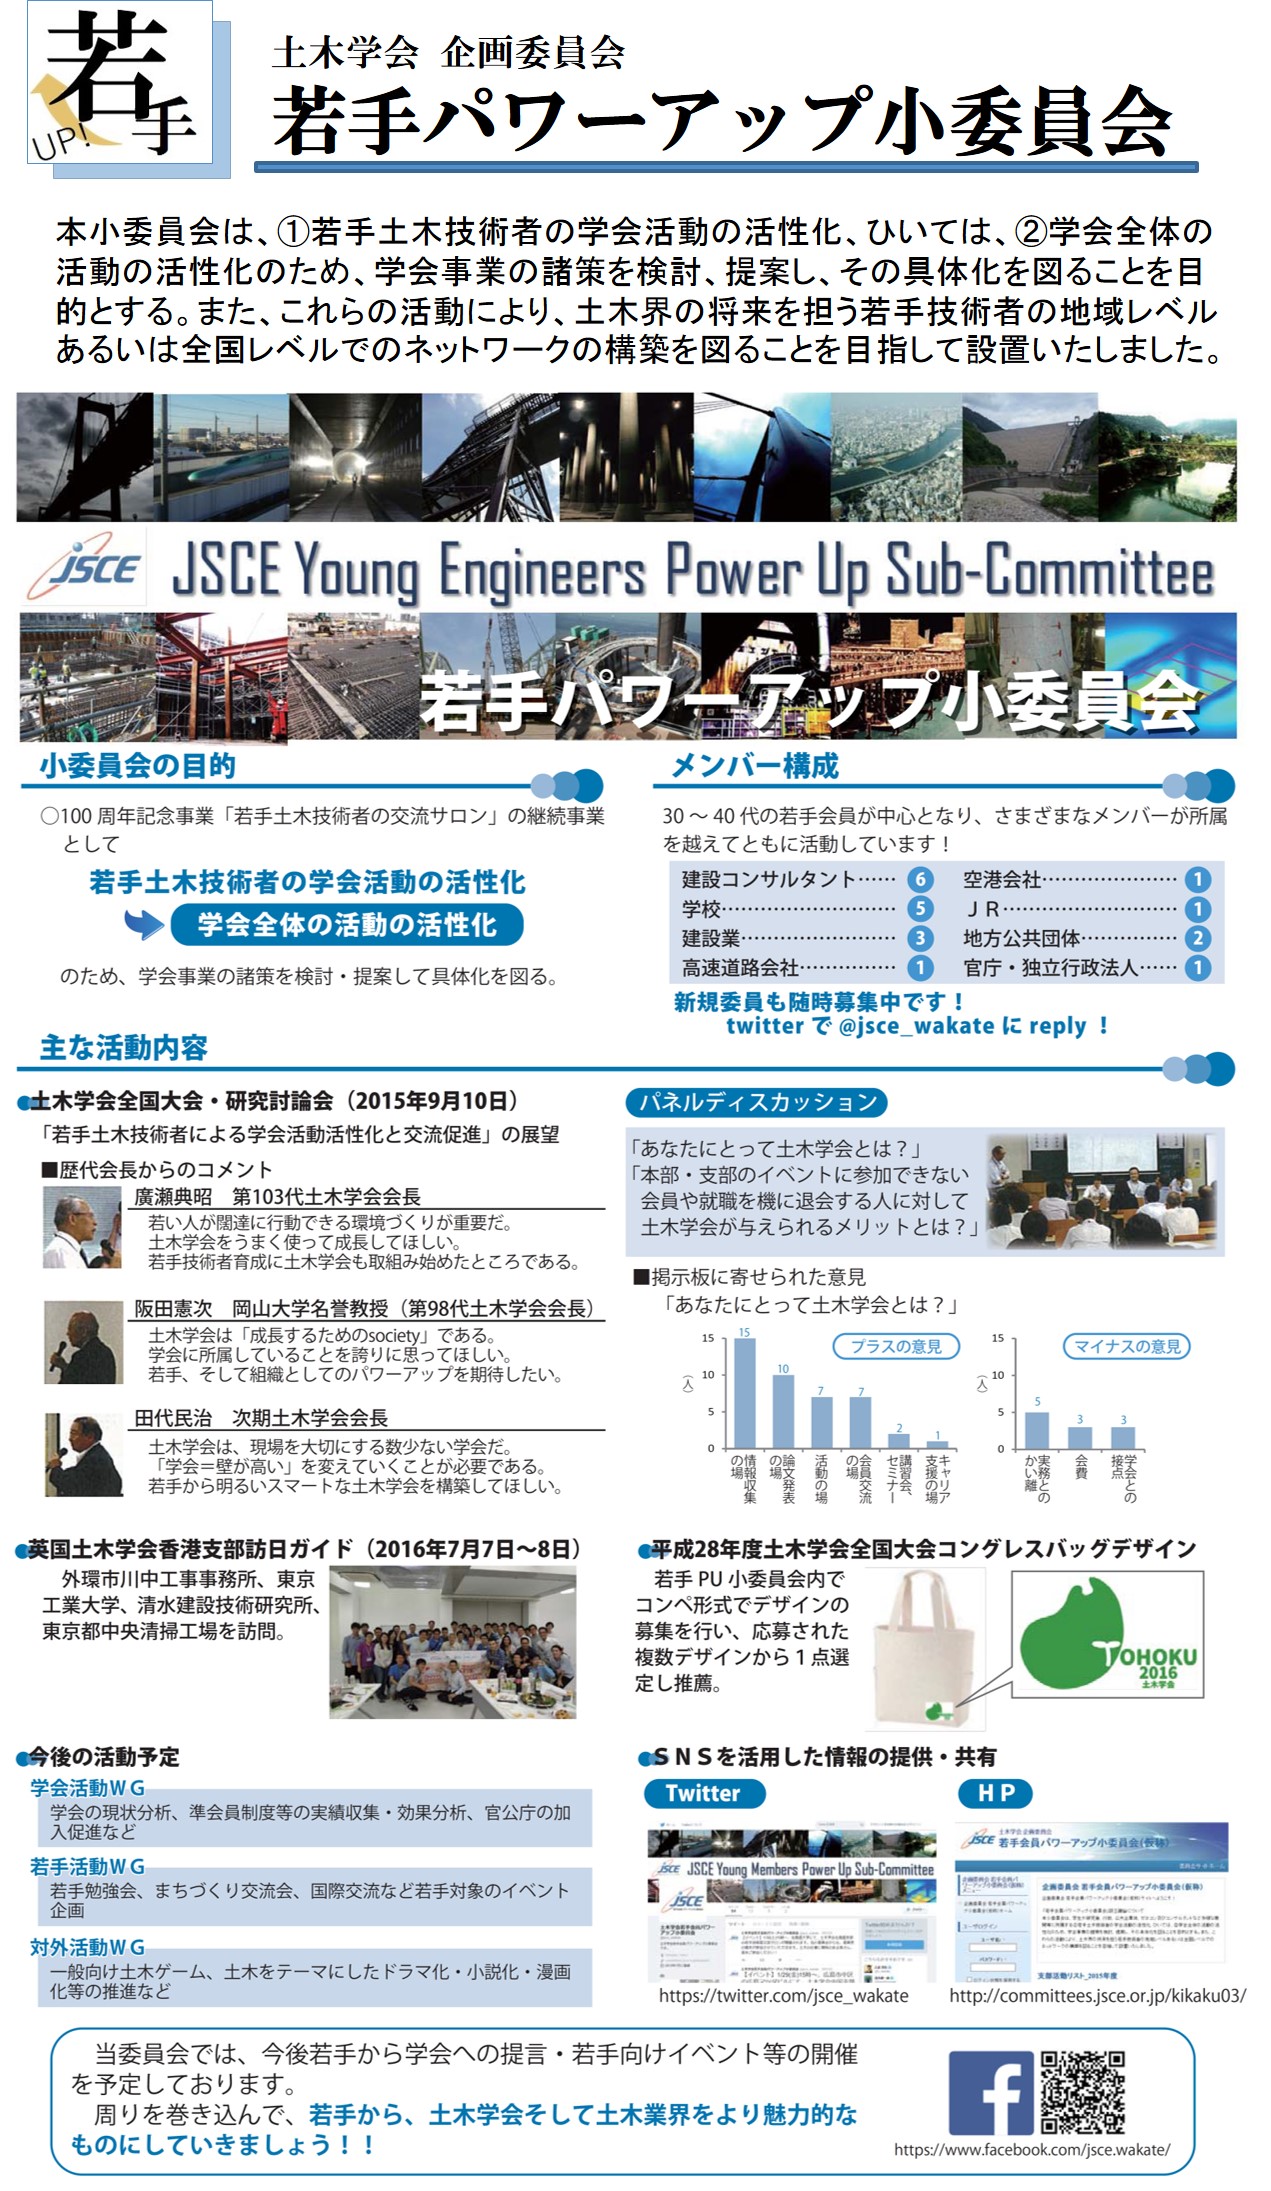 http://committees.jsce.or.jp/kikaku03/system/files/wakateactivity-1.jpg